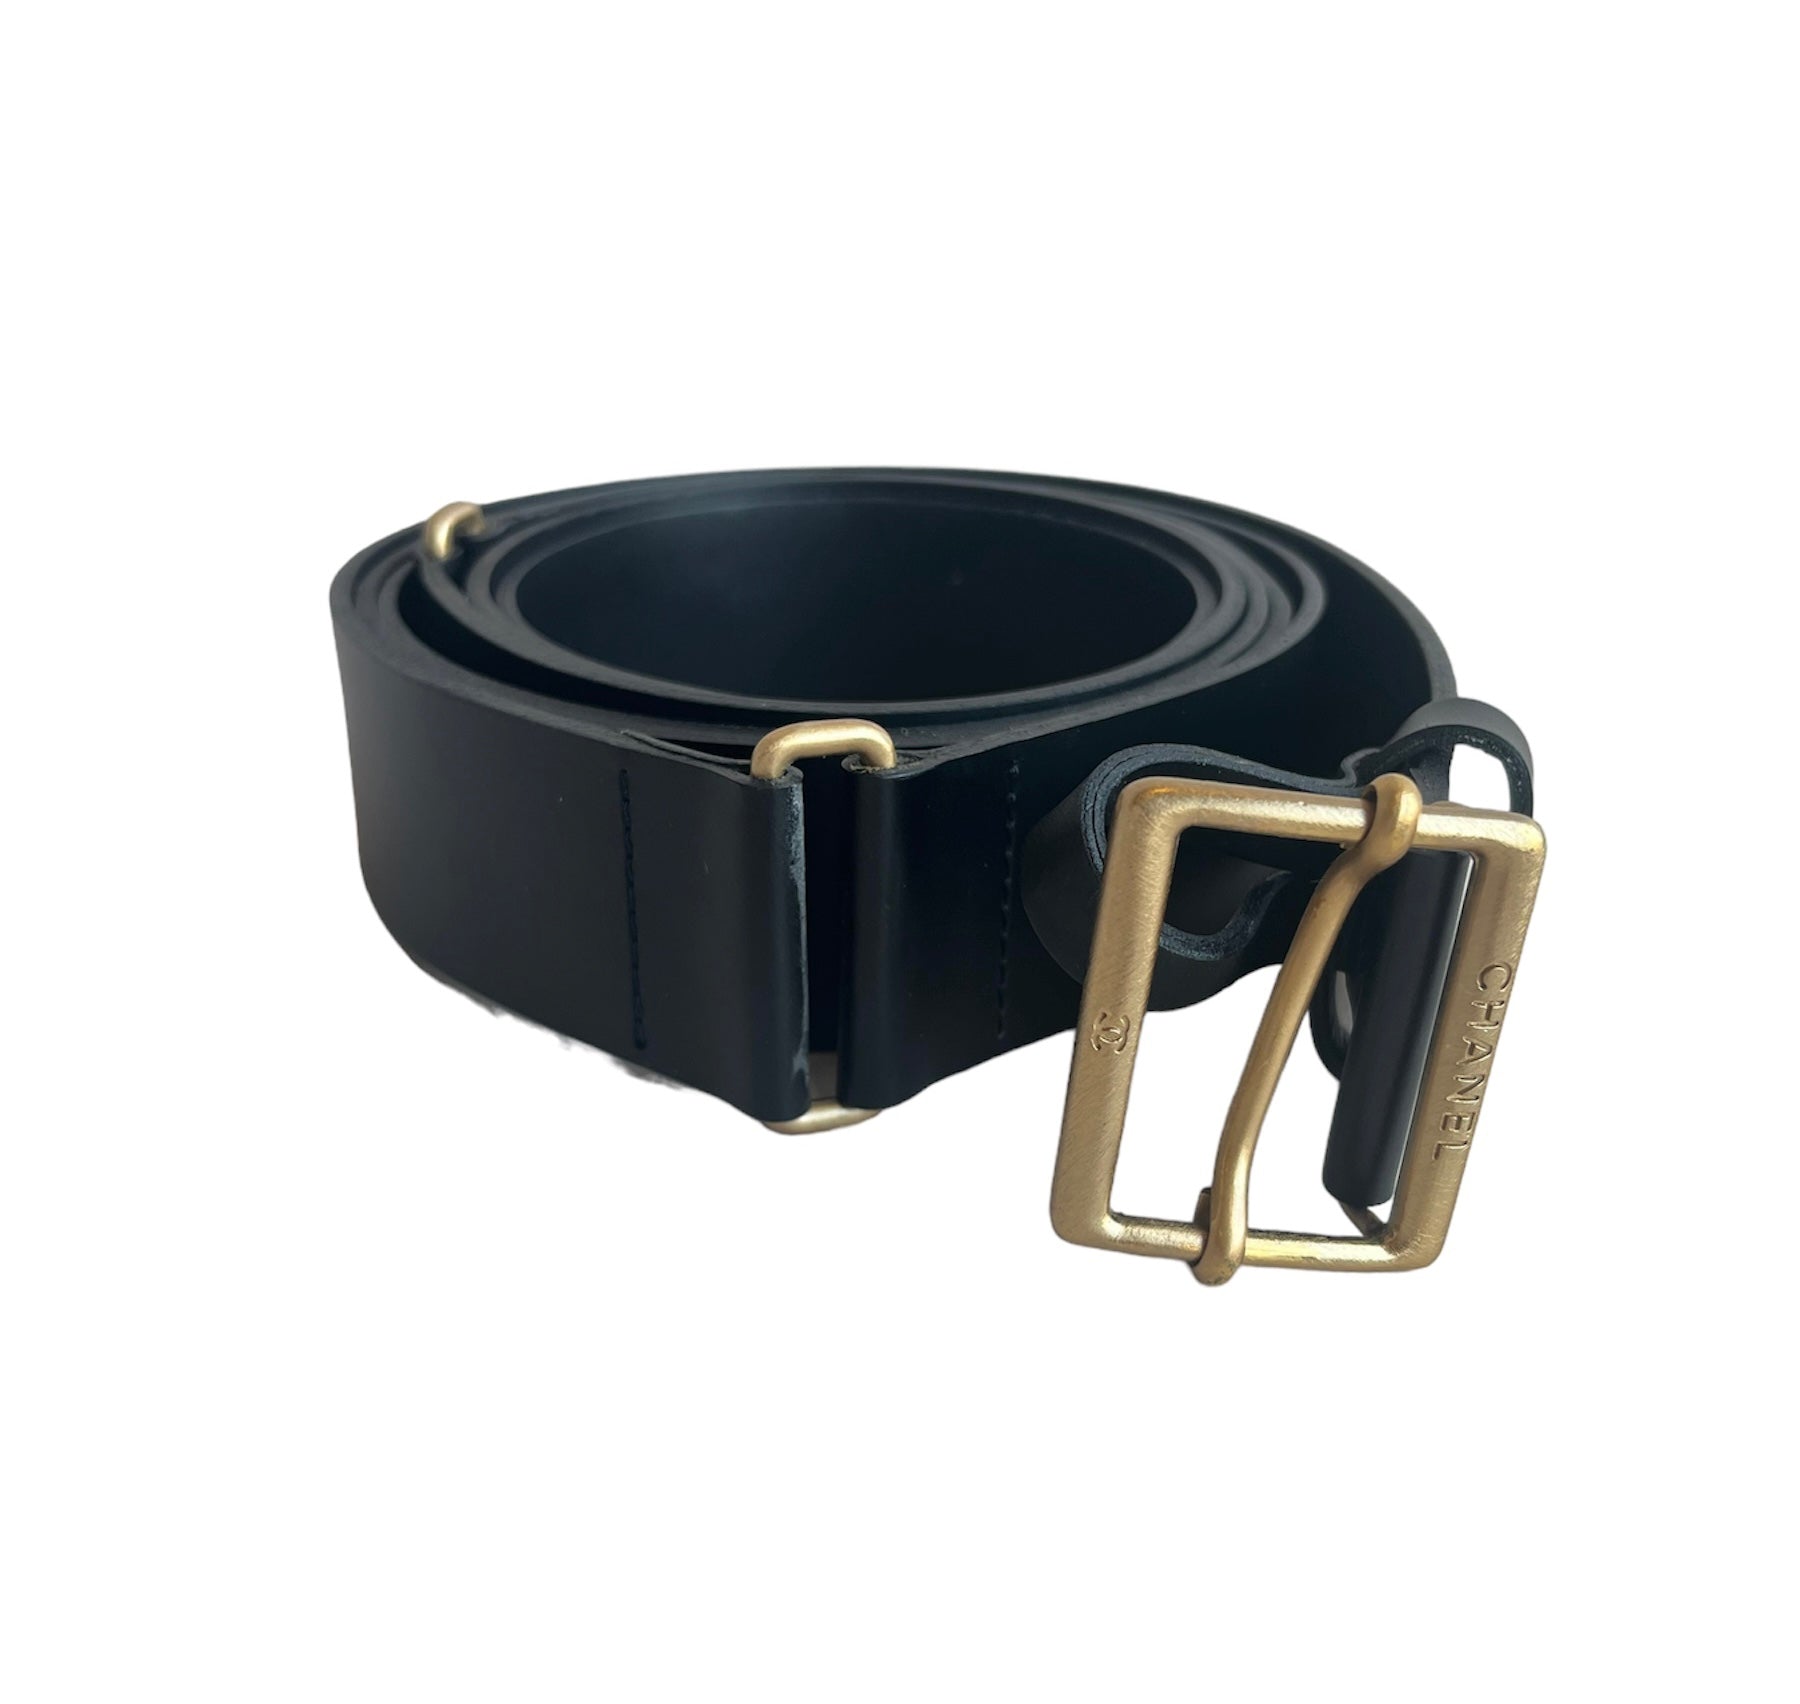 Chanel Black Leather double wrap belt